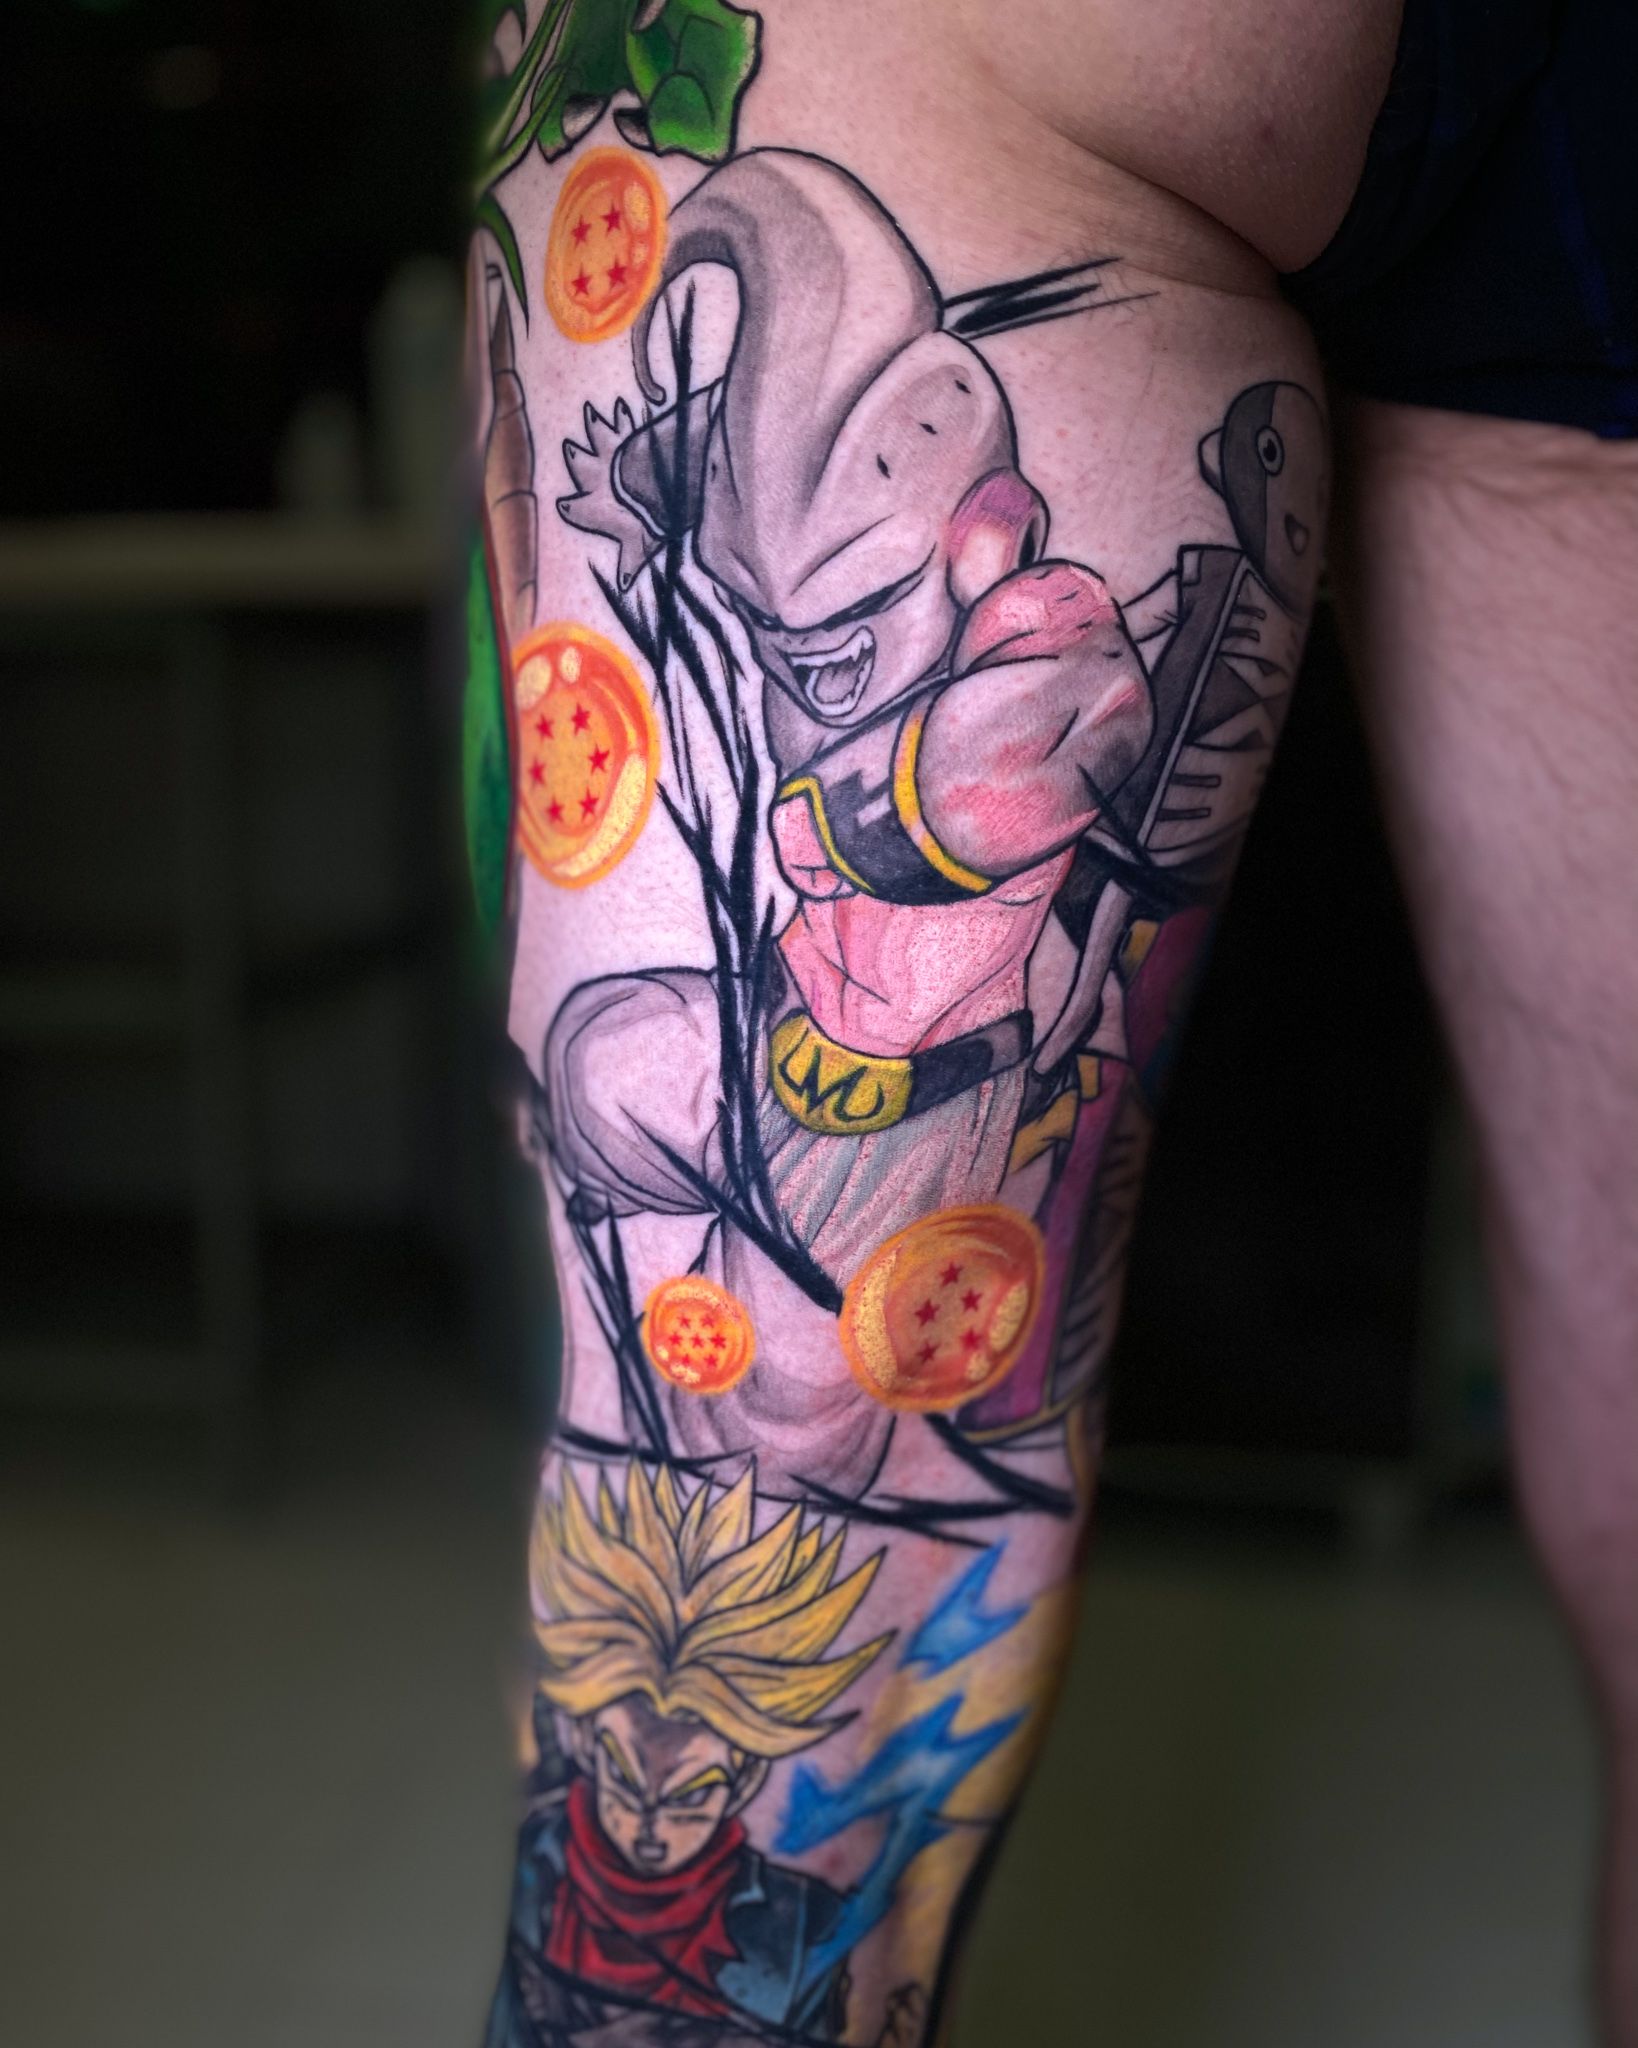 Start of a full naruto leg sleeve  DnA Tattoo Studio  Facebook